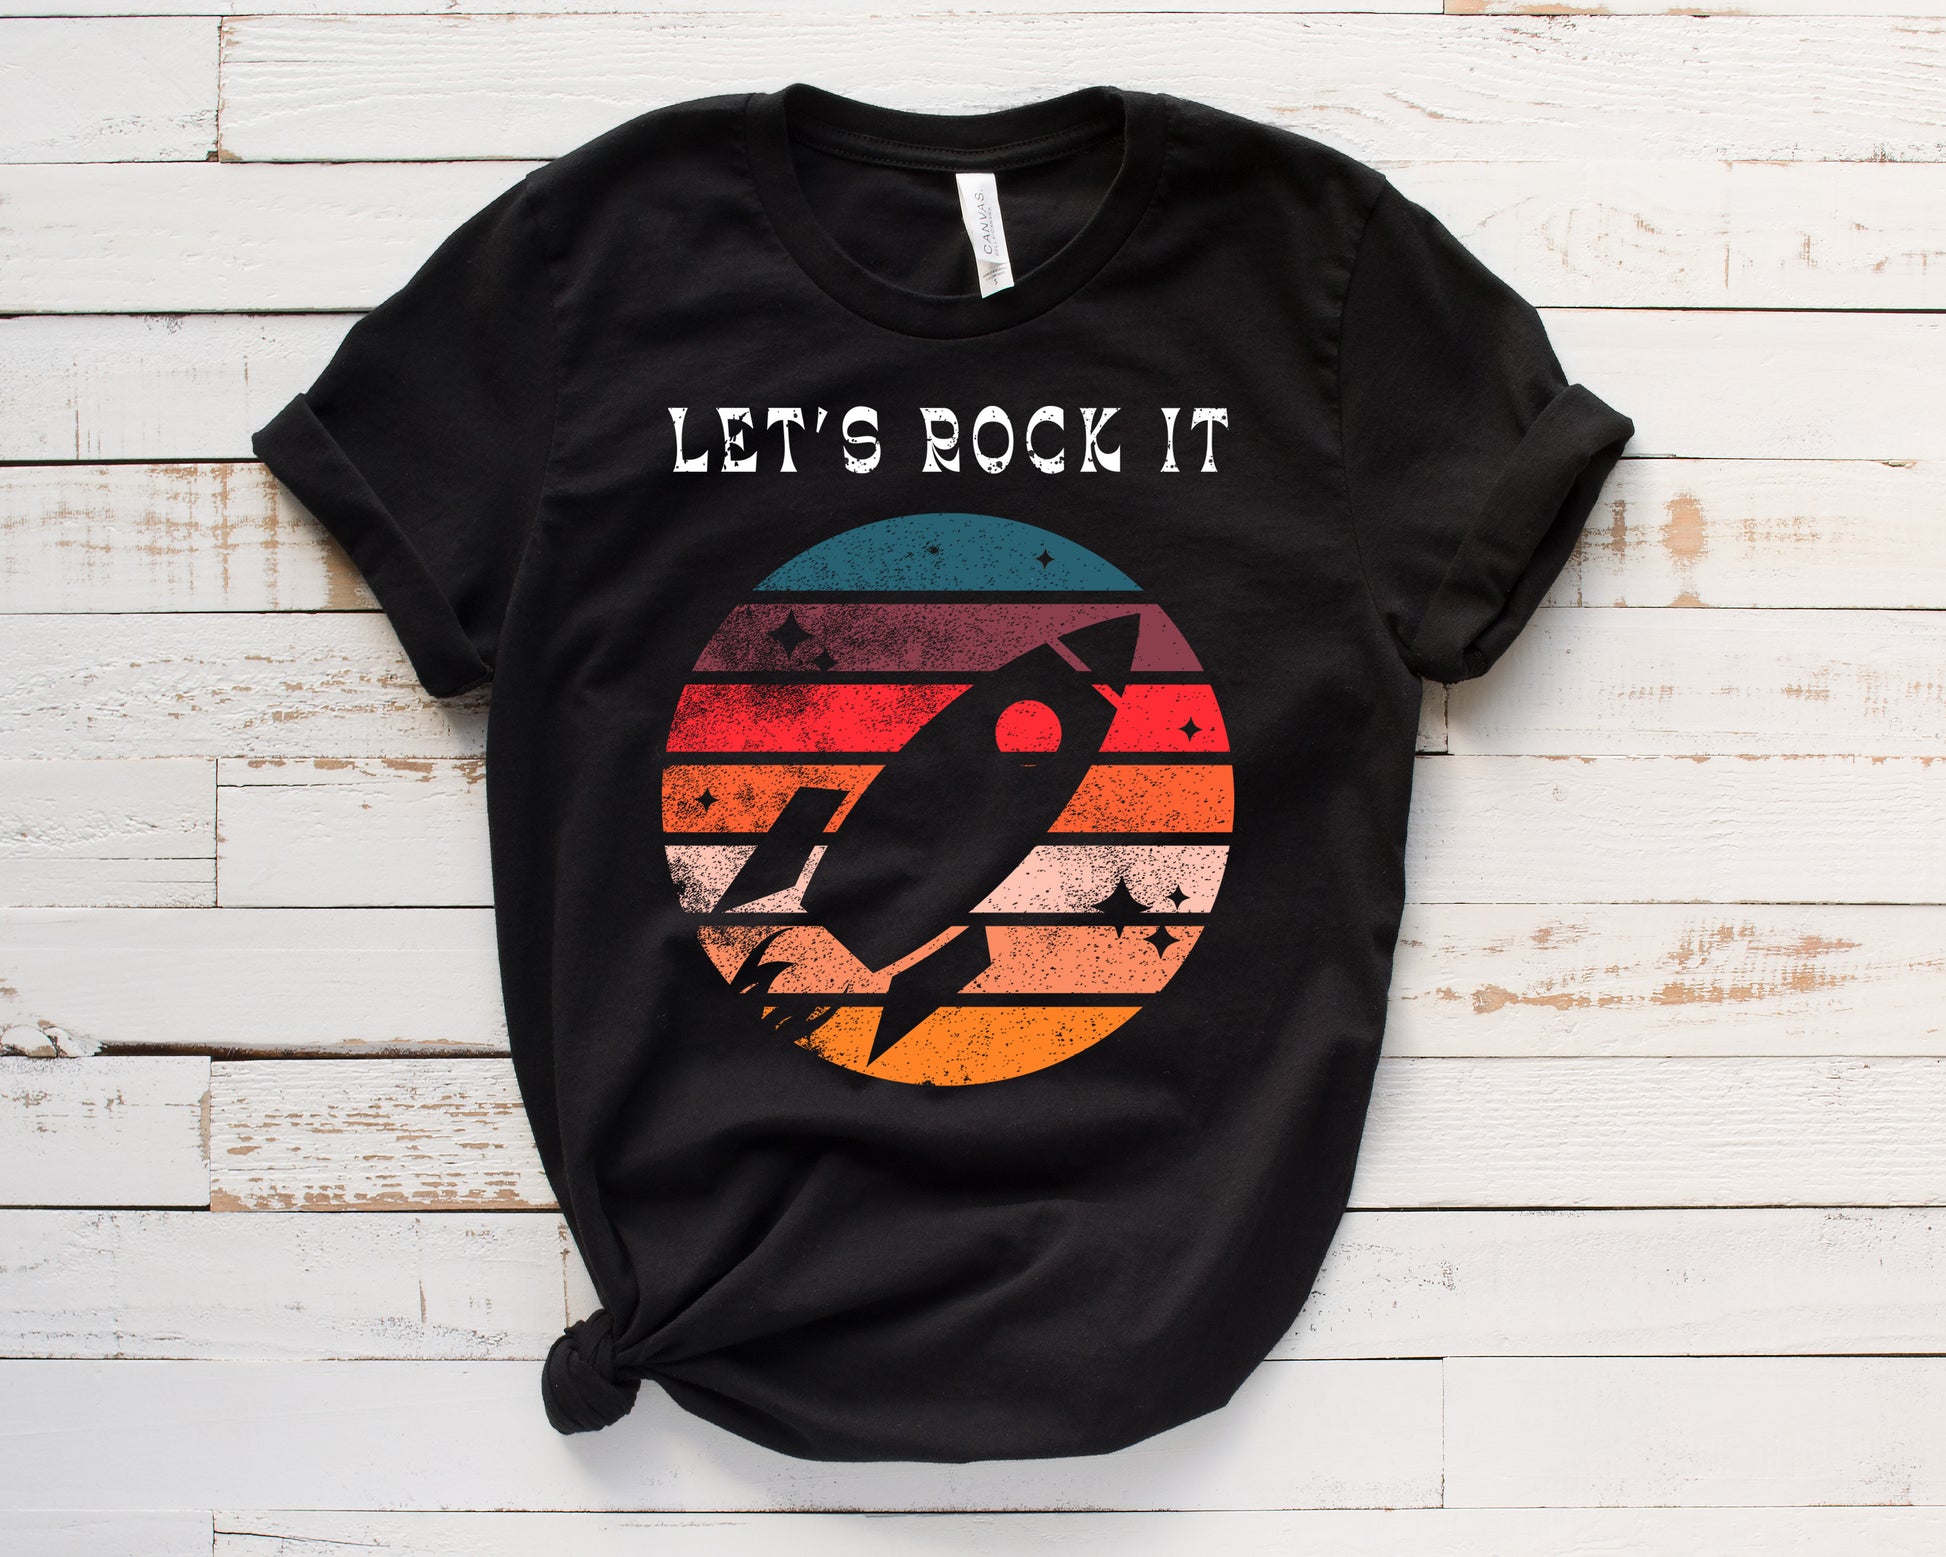 Let's Rock It black unisex rocket shirt unisex tee